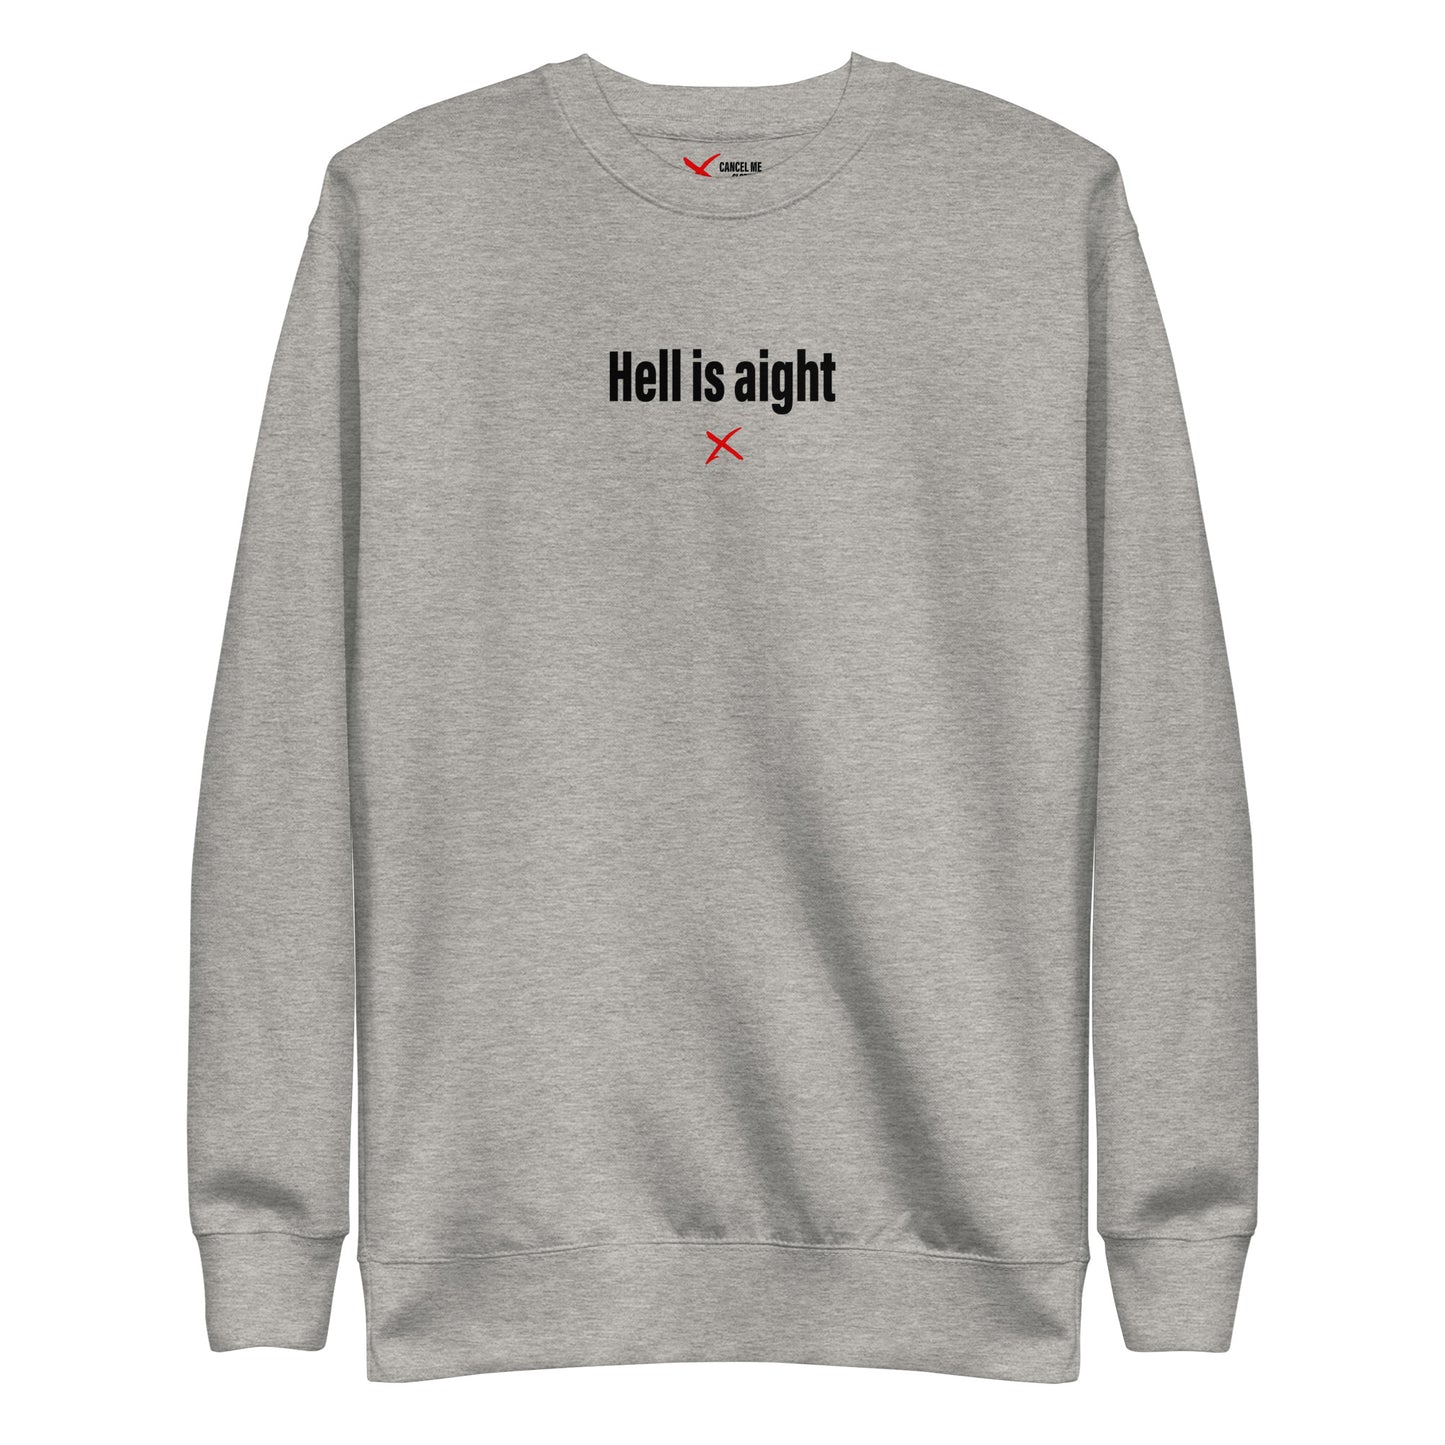 Hell is aight - Sweatshirt